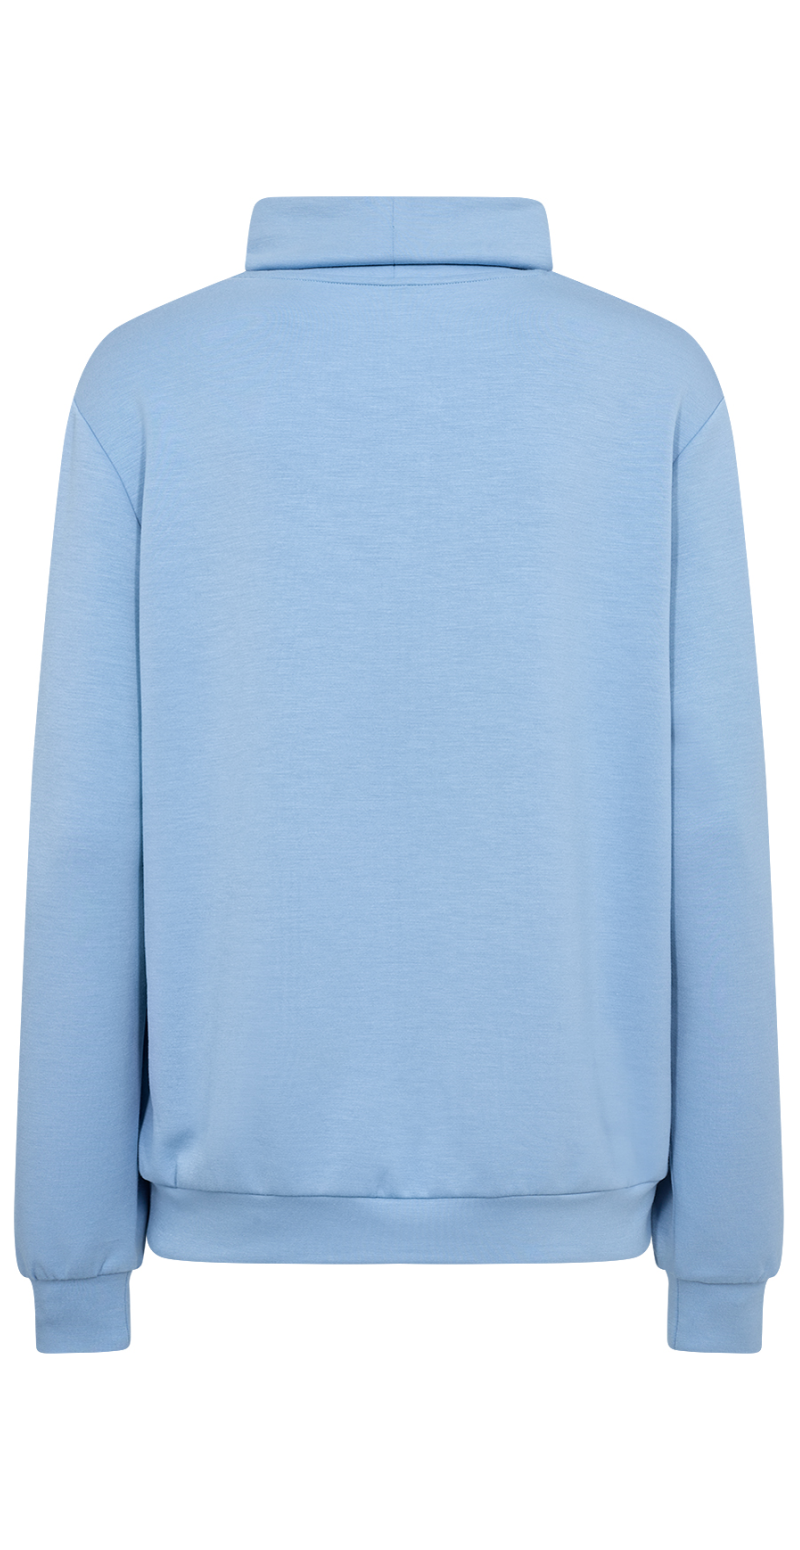 Isabella sweatshirt i modal kvalitet blå